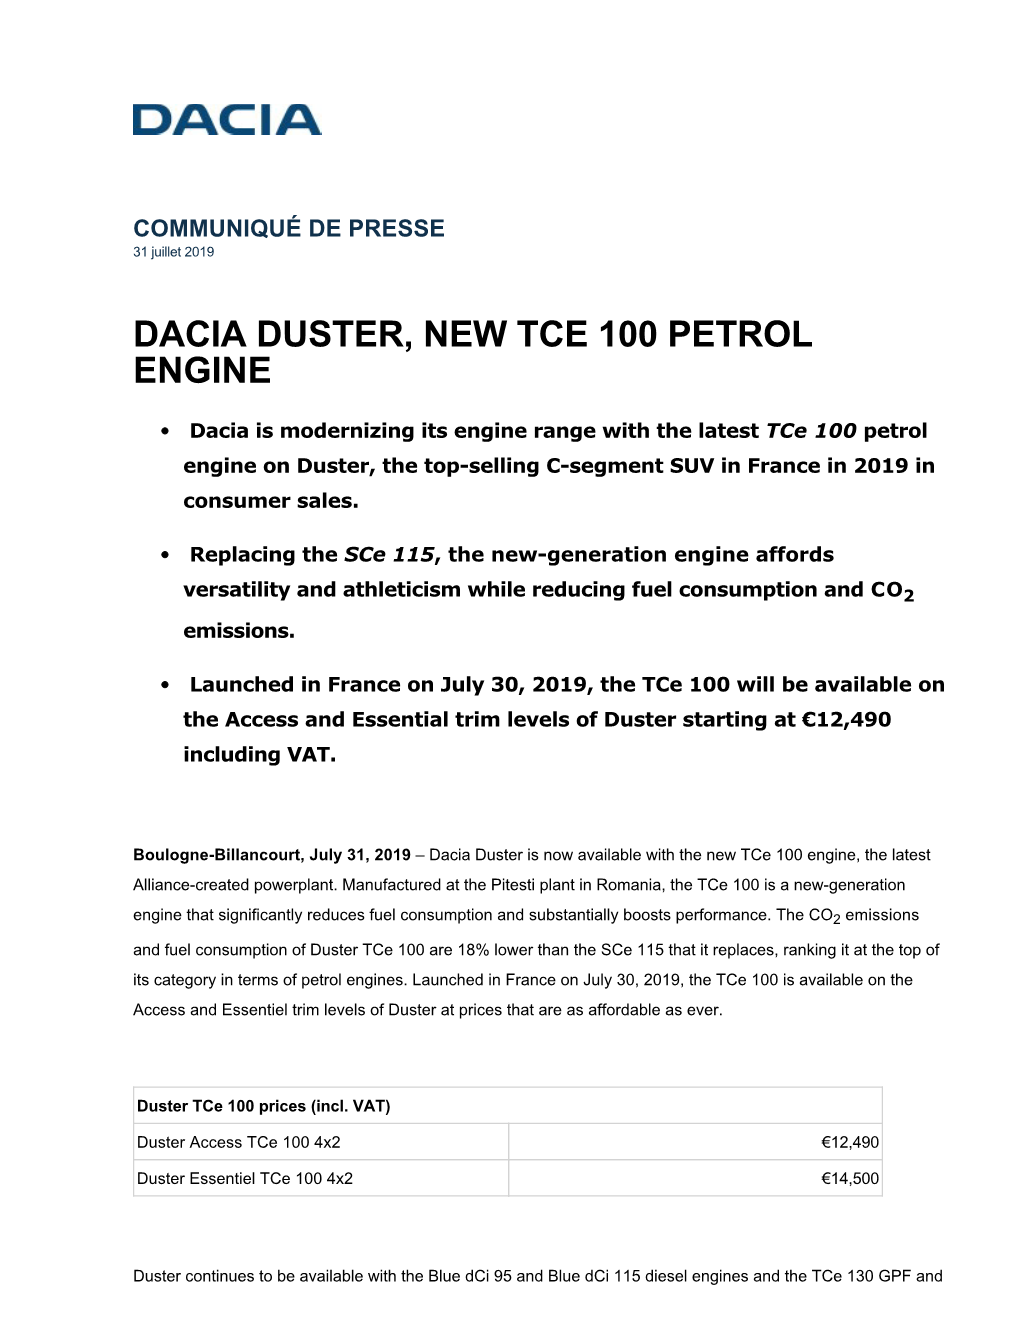 Dacia Duster, New Tce 100 Petrol Engine